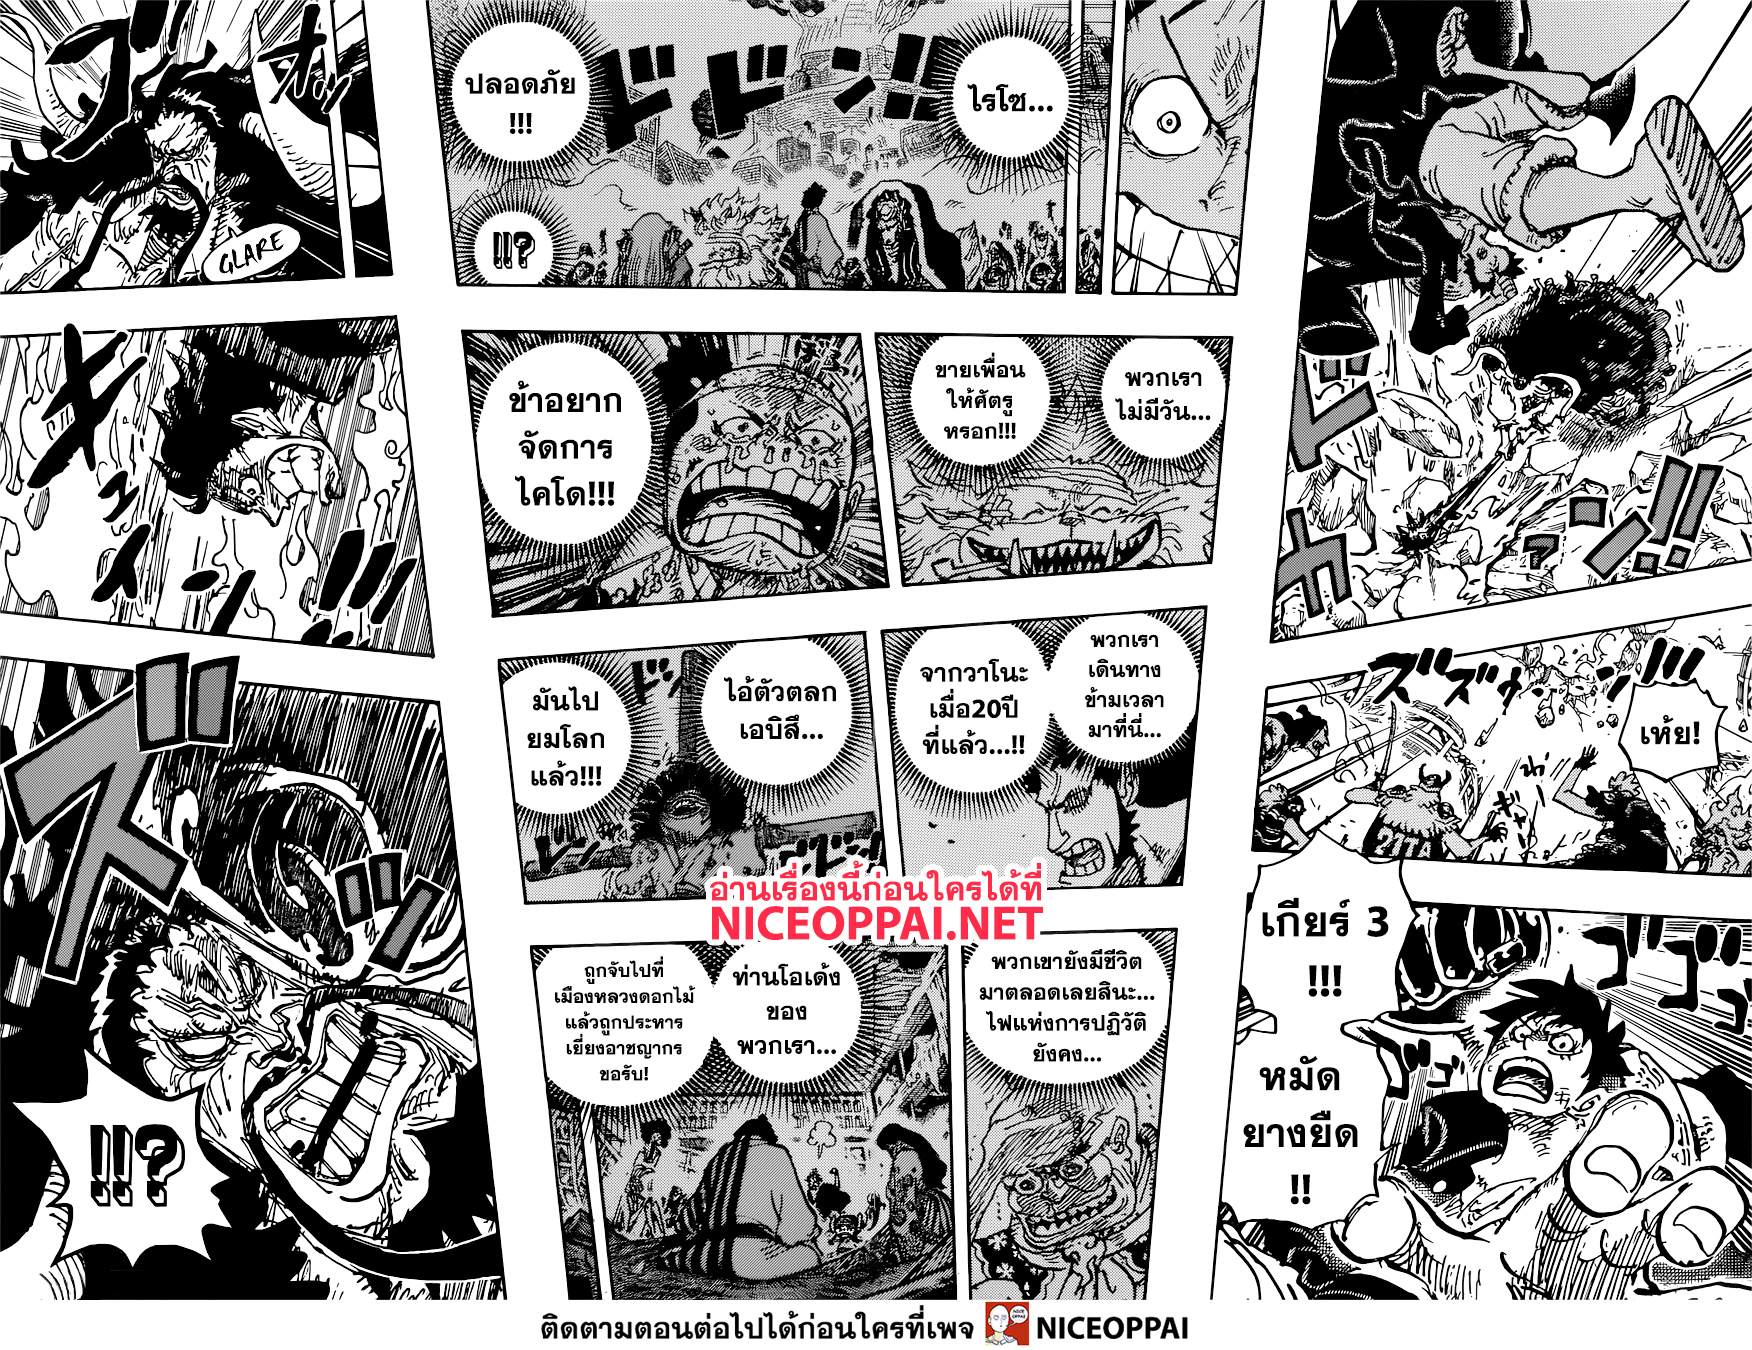 One Piece 1000-หมวกฟางลูฟี่